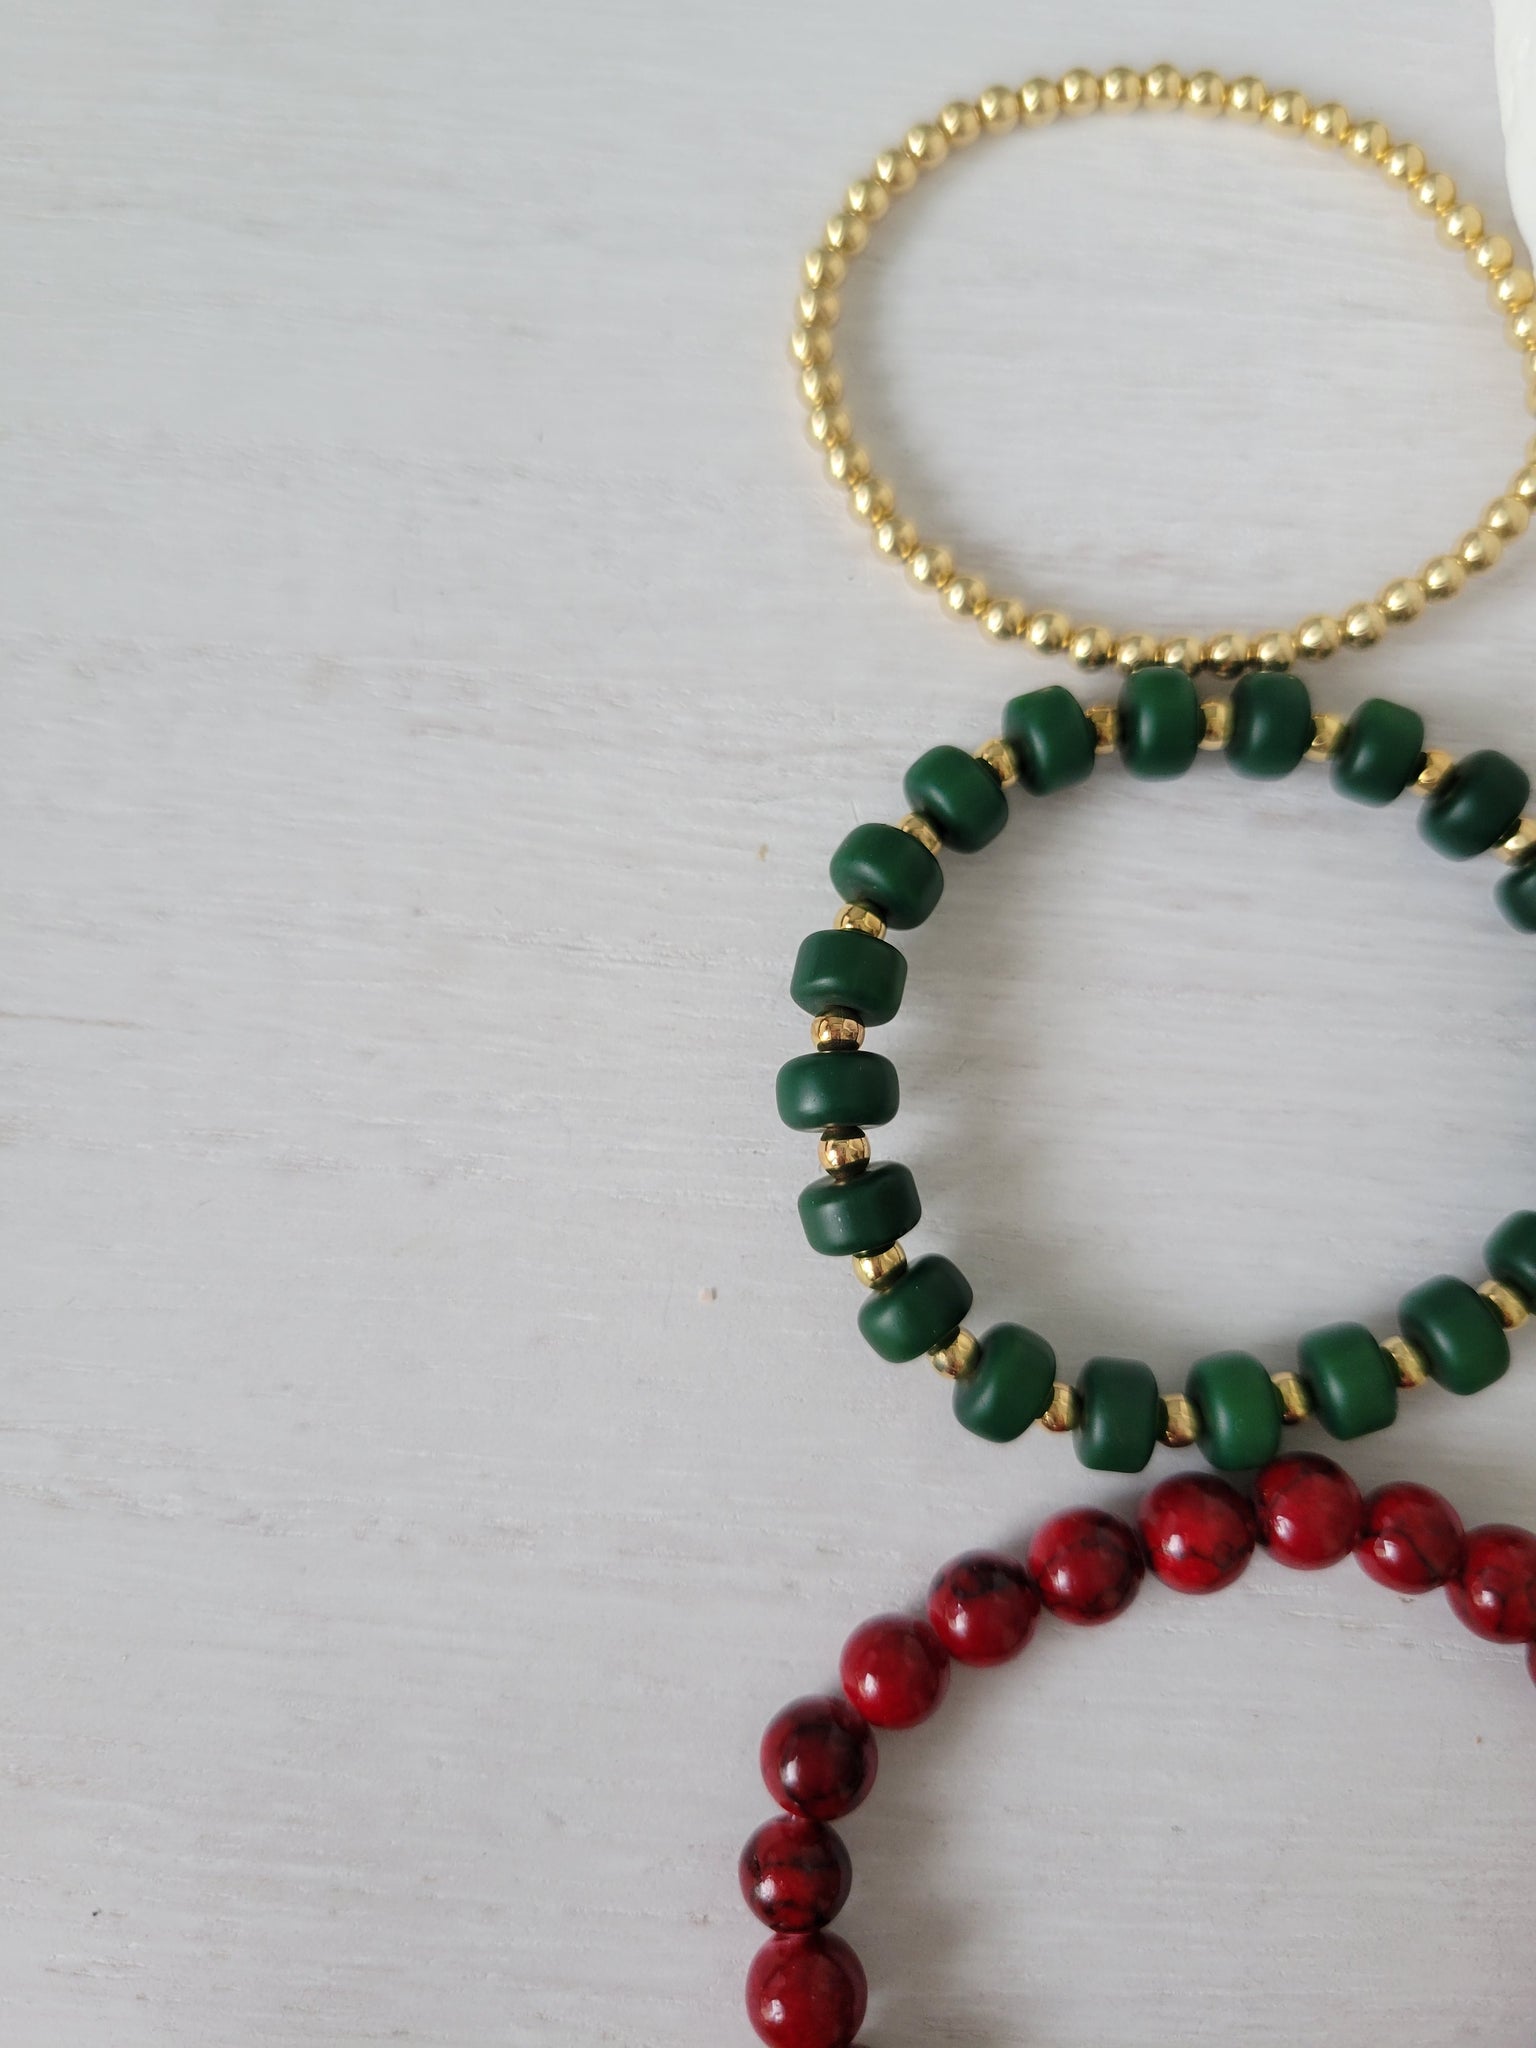 Cranberries & Pine Christmas Bracelet Set - Several Options